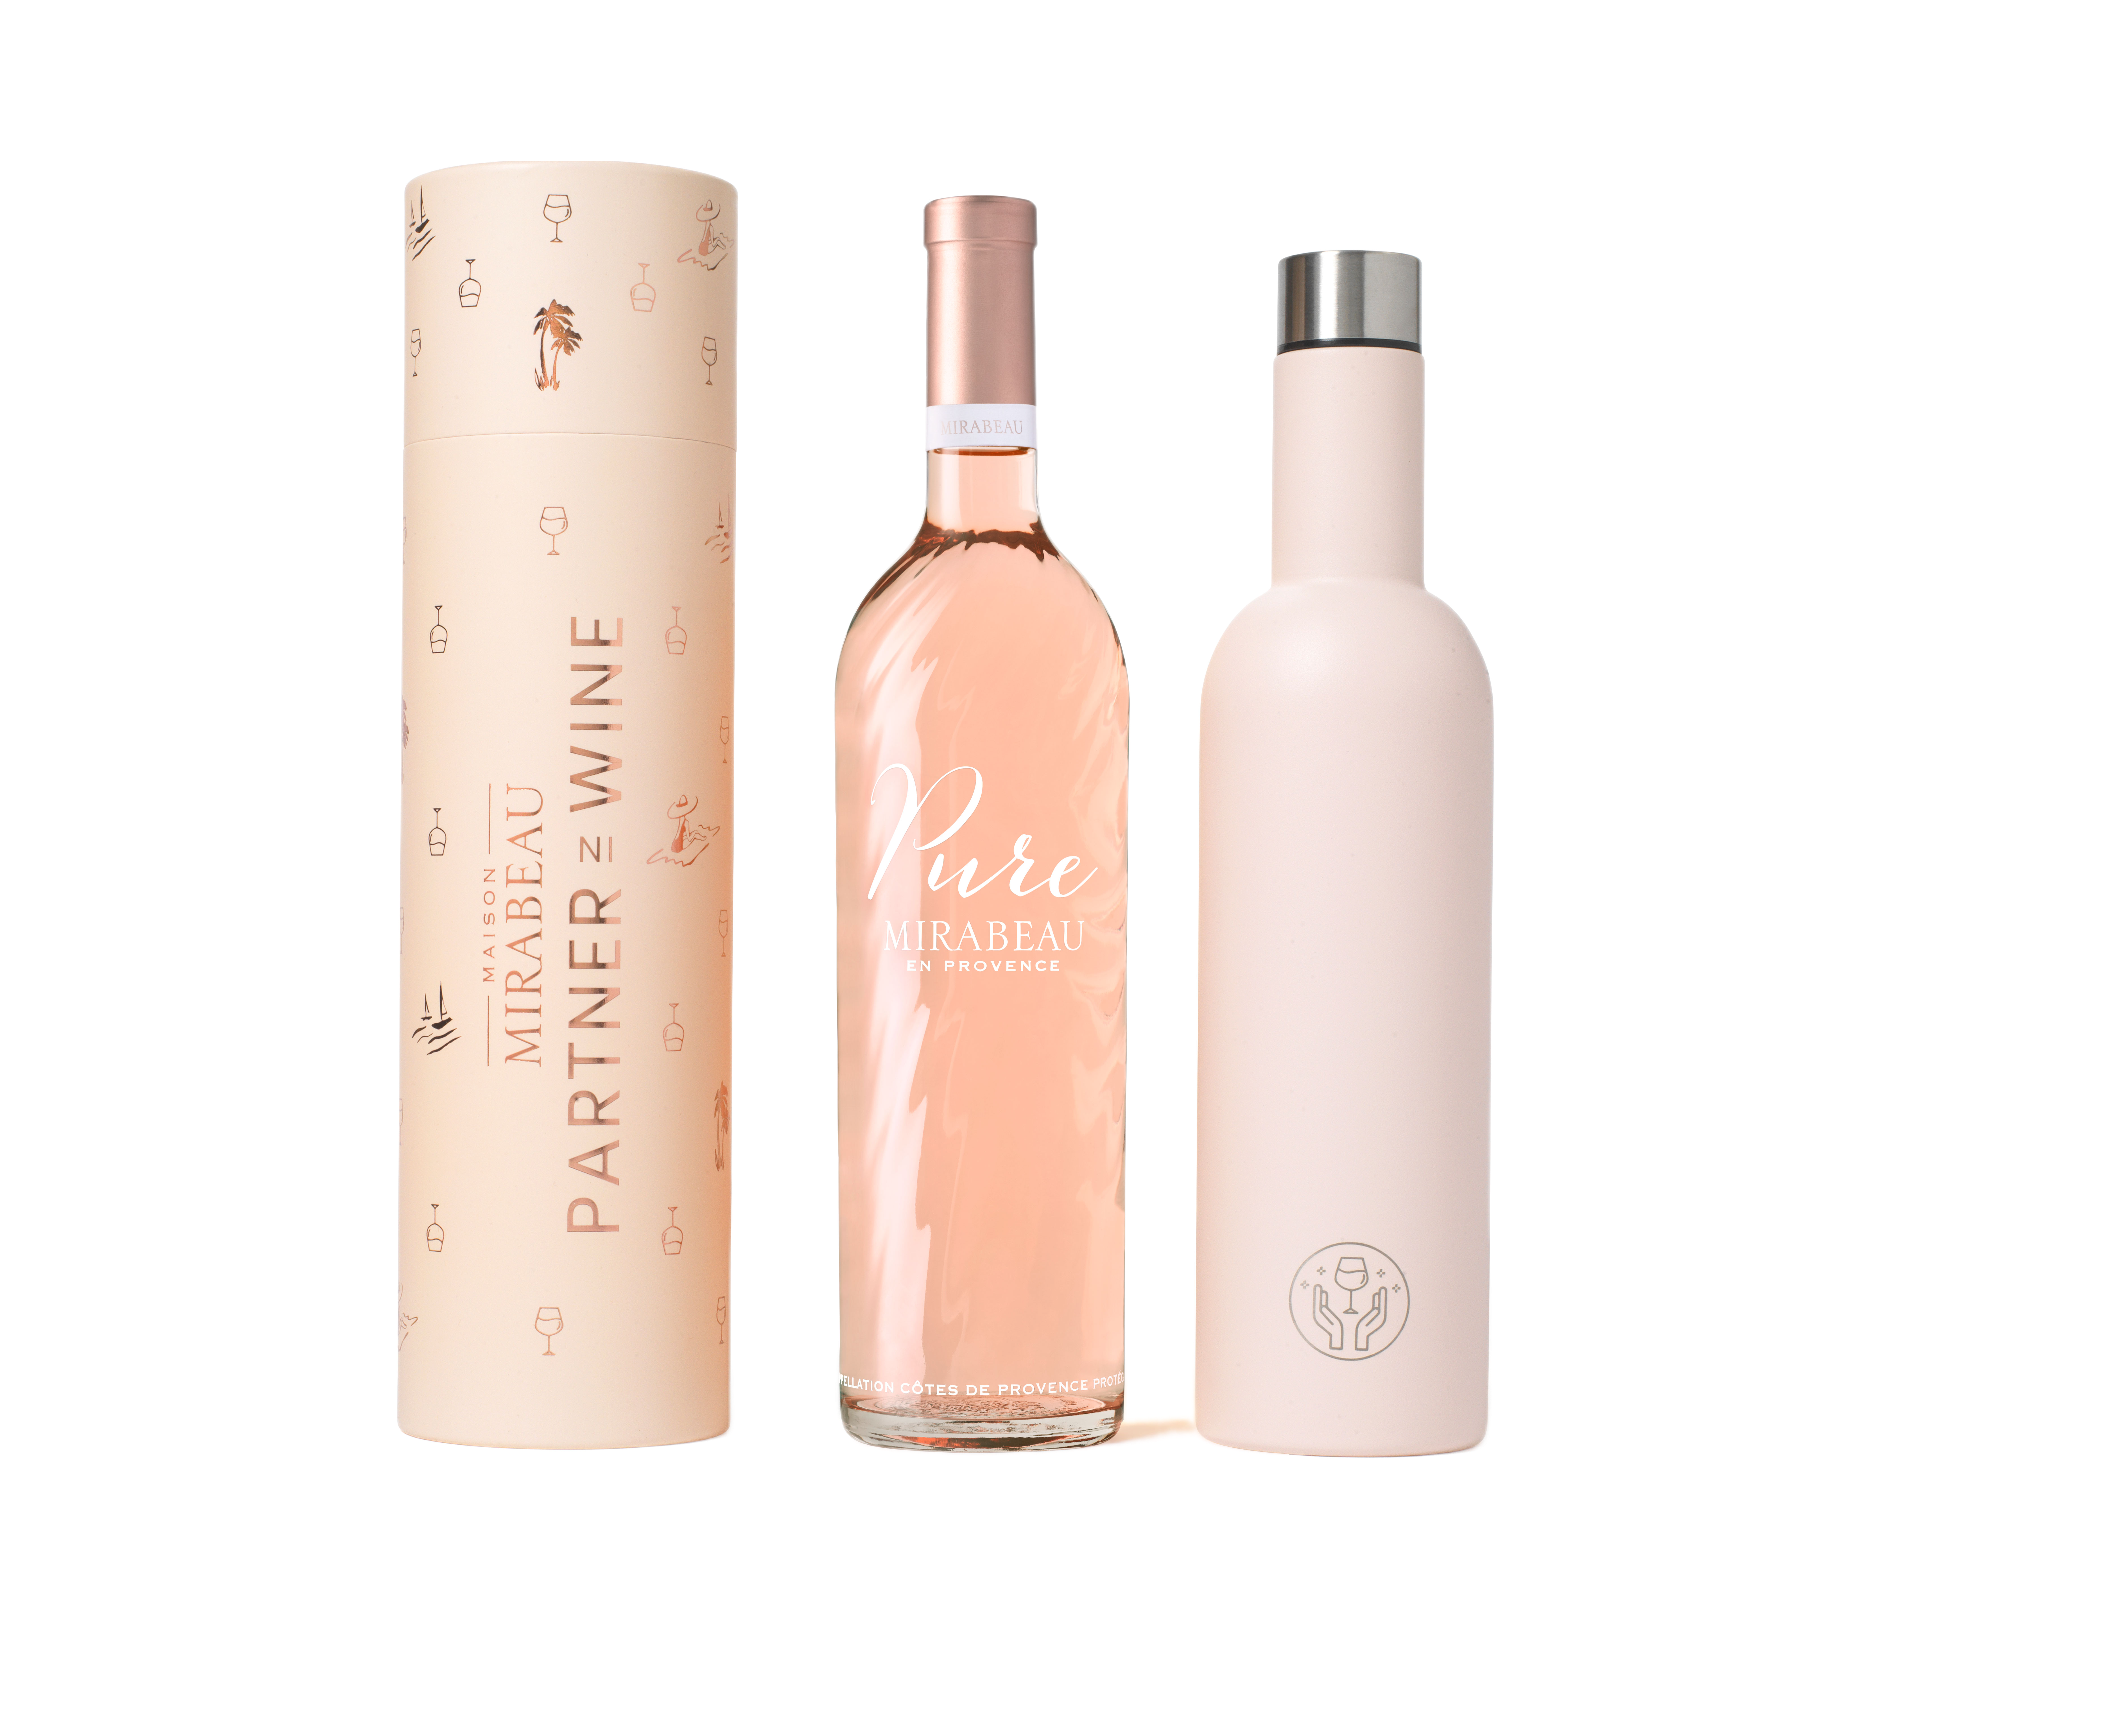 Maison Mirabeau x Partner in Wine Pure Pink Bottle Bundle